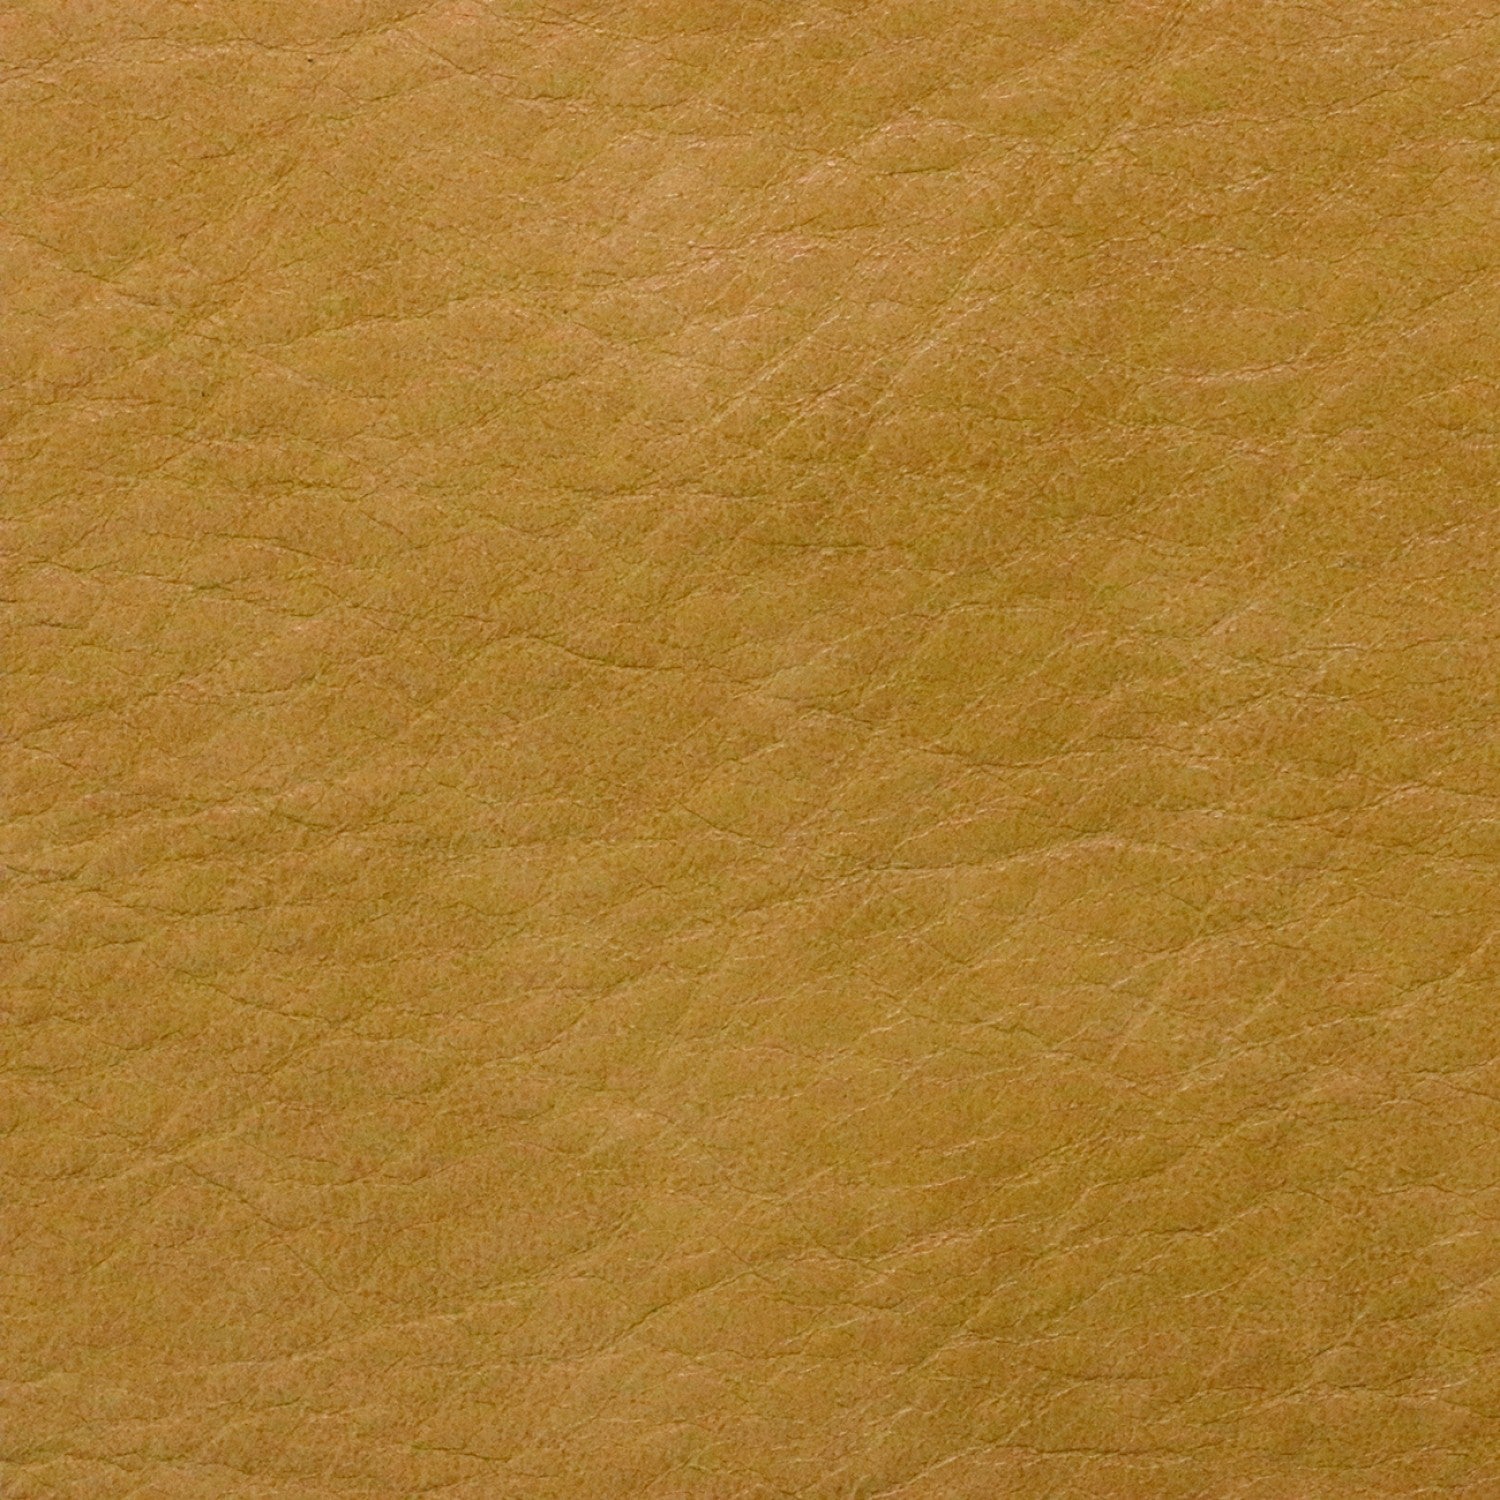 Faux Leather, Mustard Legacy 1/2 yard HFFL1327